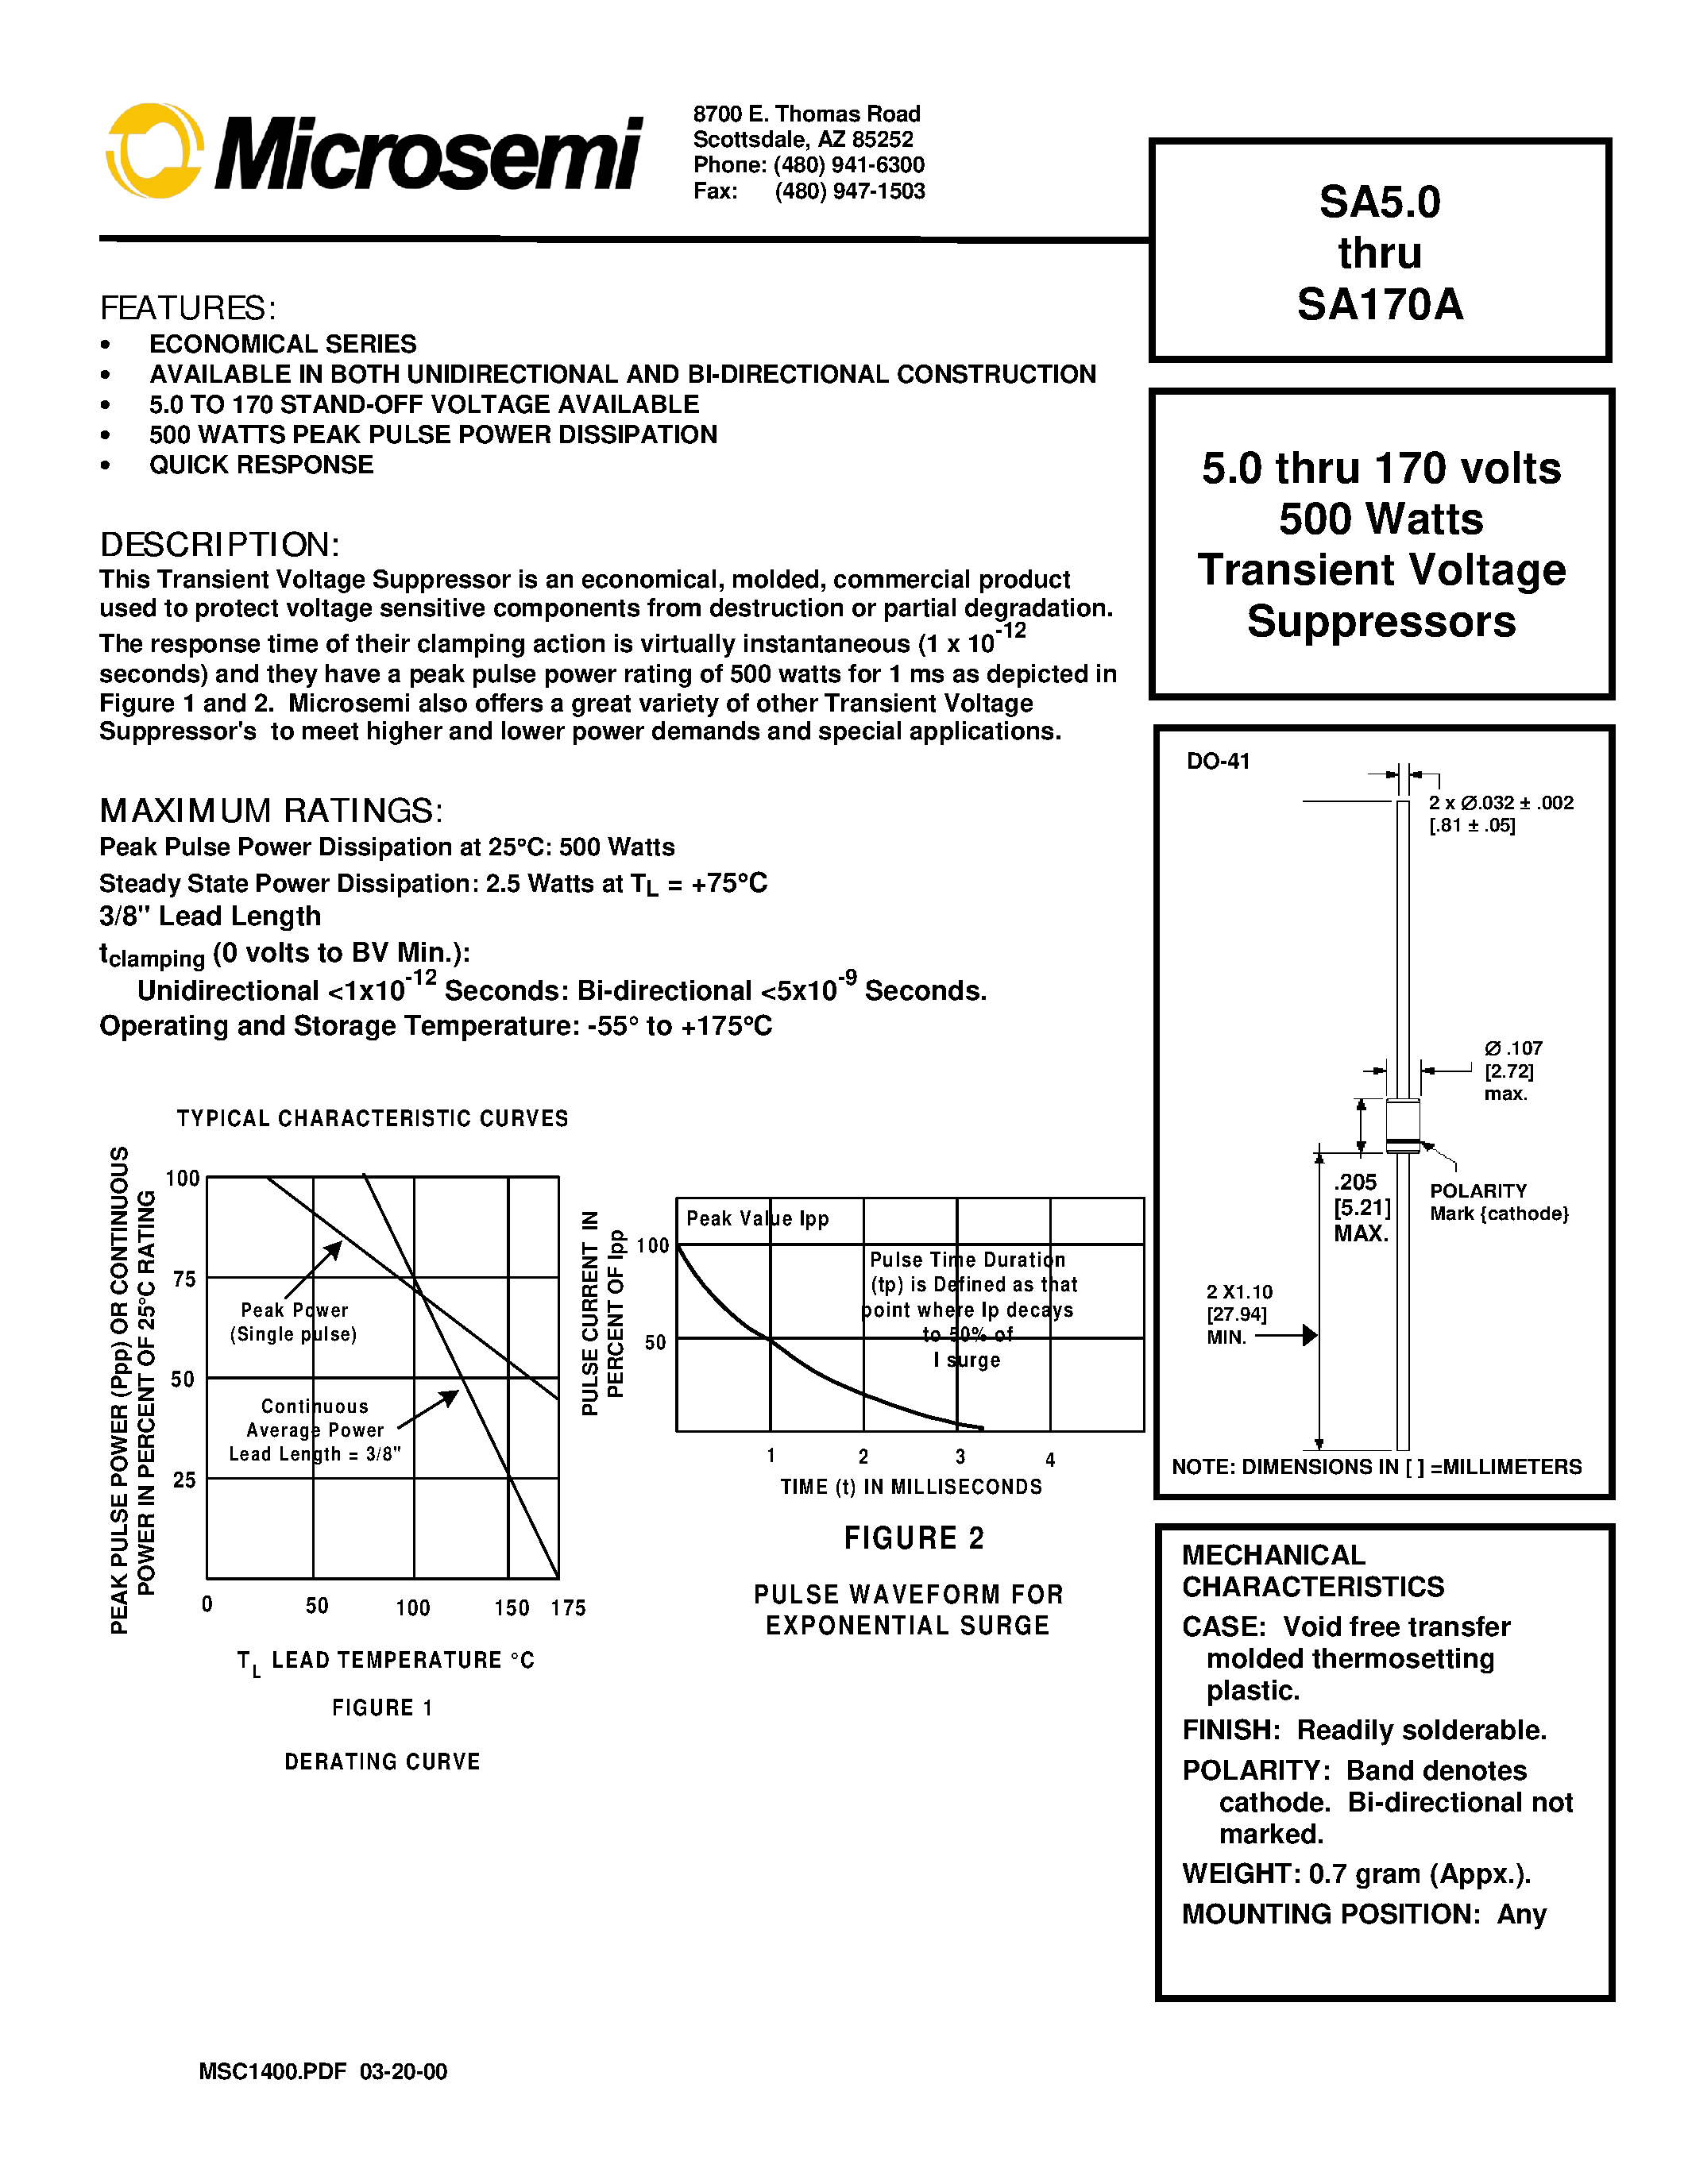 Datasheet SA20A - 5.0 thru 170 volts 500 Watts Transient Voltage Suppressors page 1